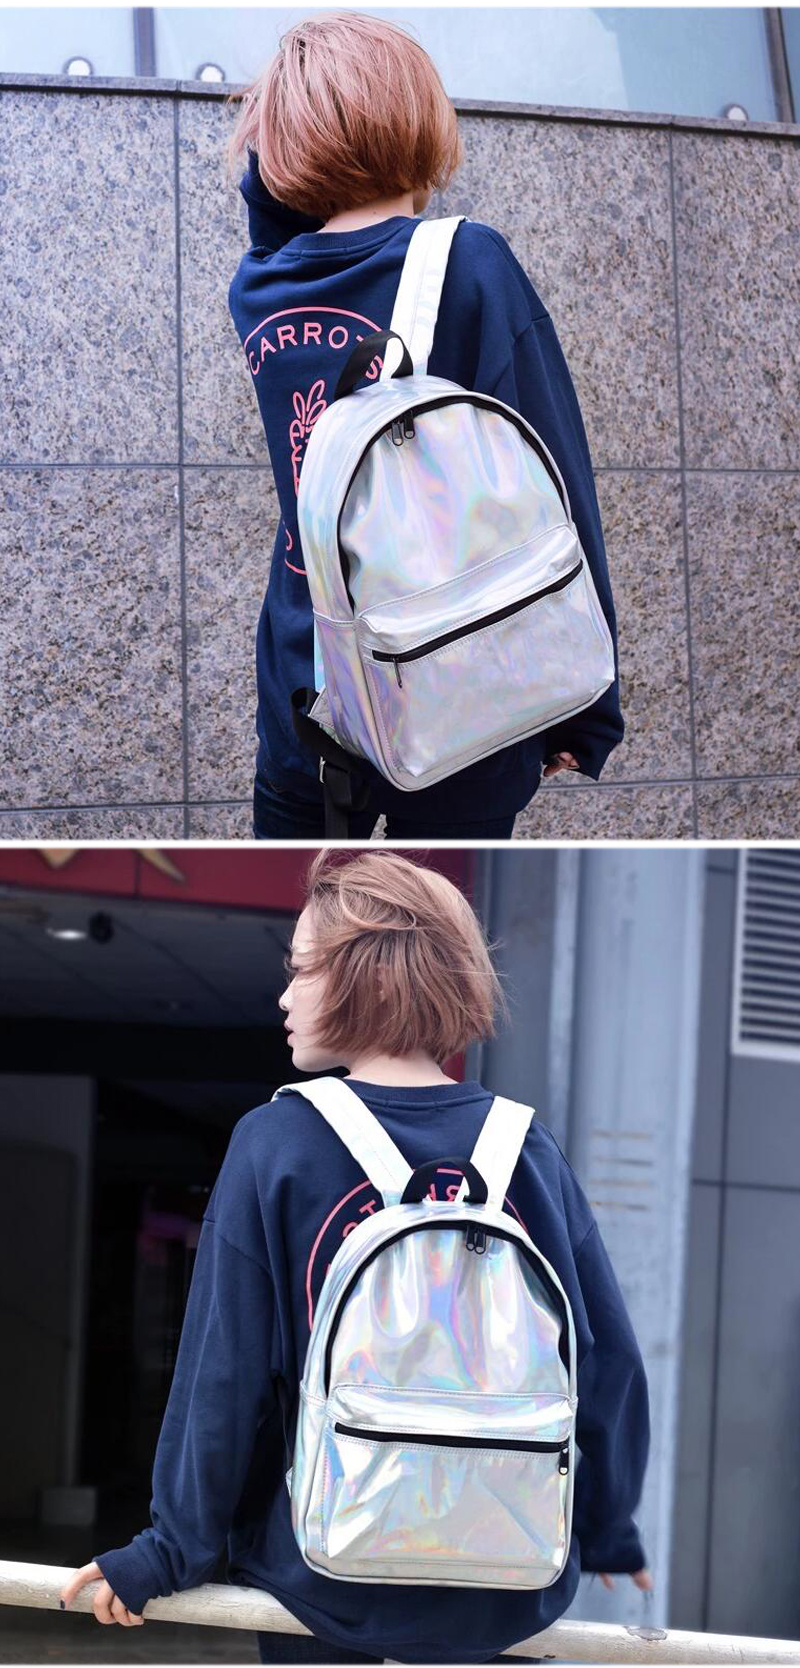 USB-PU-Backpack-Waterproof-14-Inch-Laptop-School-Bag-Camping-Travel-Pack-Shoulder-Bag-Handbag-1356669-2